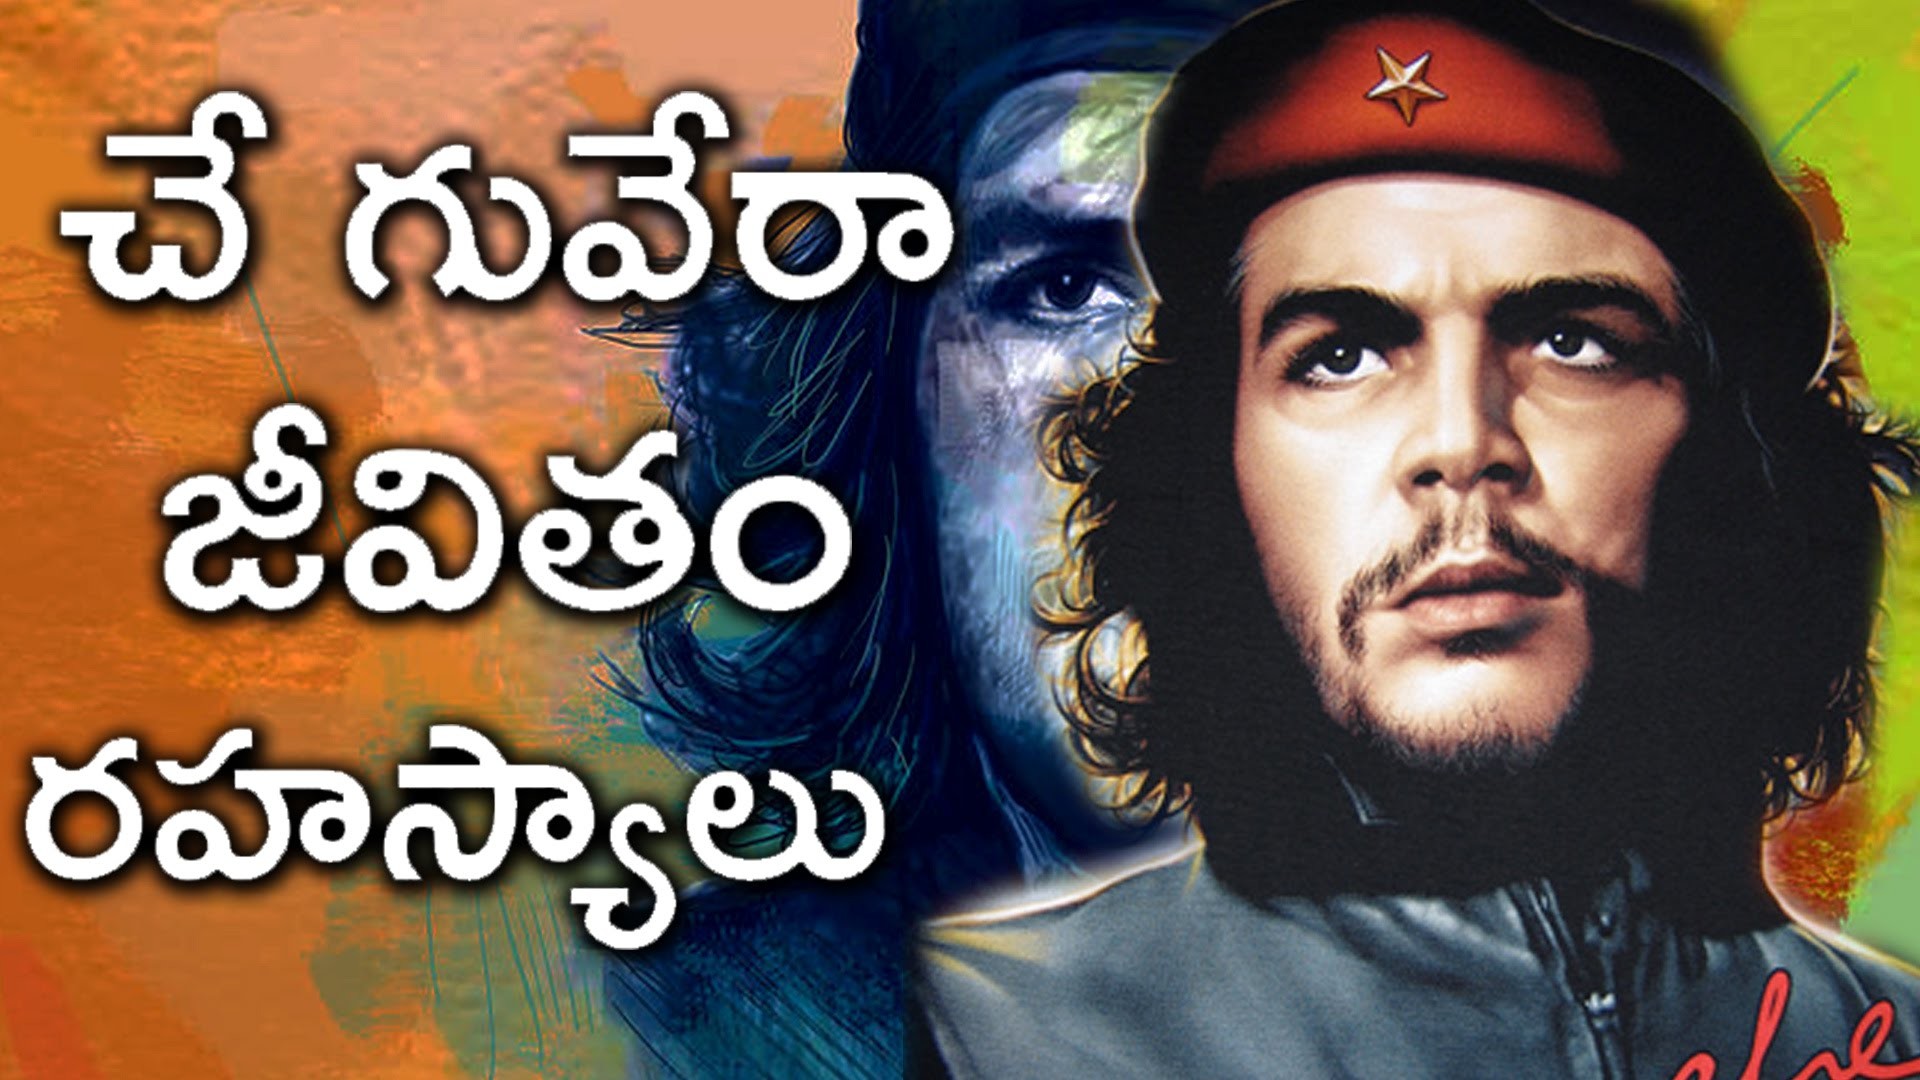 Che Guevara Life History Full Video in Telugu | à°à± à°à±à°µà±à°°à°¾ à°à±à°µà°¿à°¤à°..à°°à°¹à°¸à±à°¯à°¾à°²à±  à°ªà±à°°à±à°¤à°¿ à°µà°¿à°µà°°à°¾à°²à°¤à± – YouTube